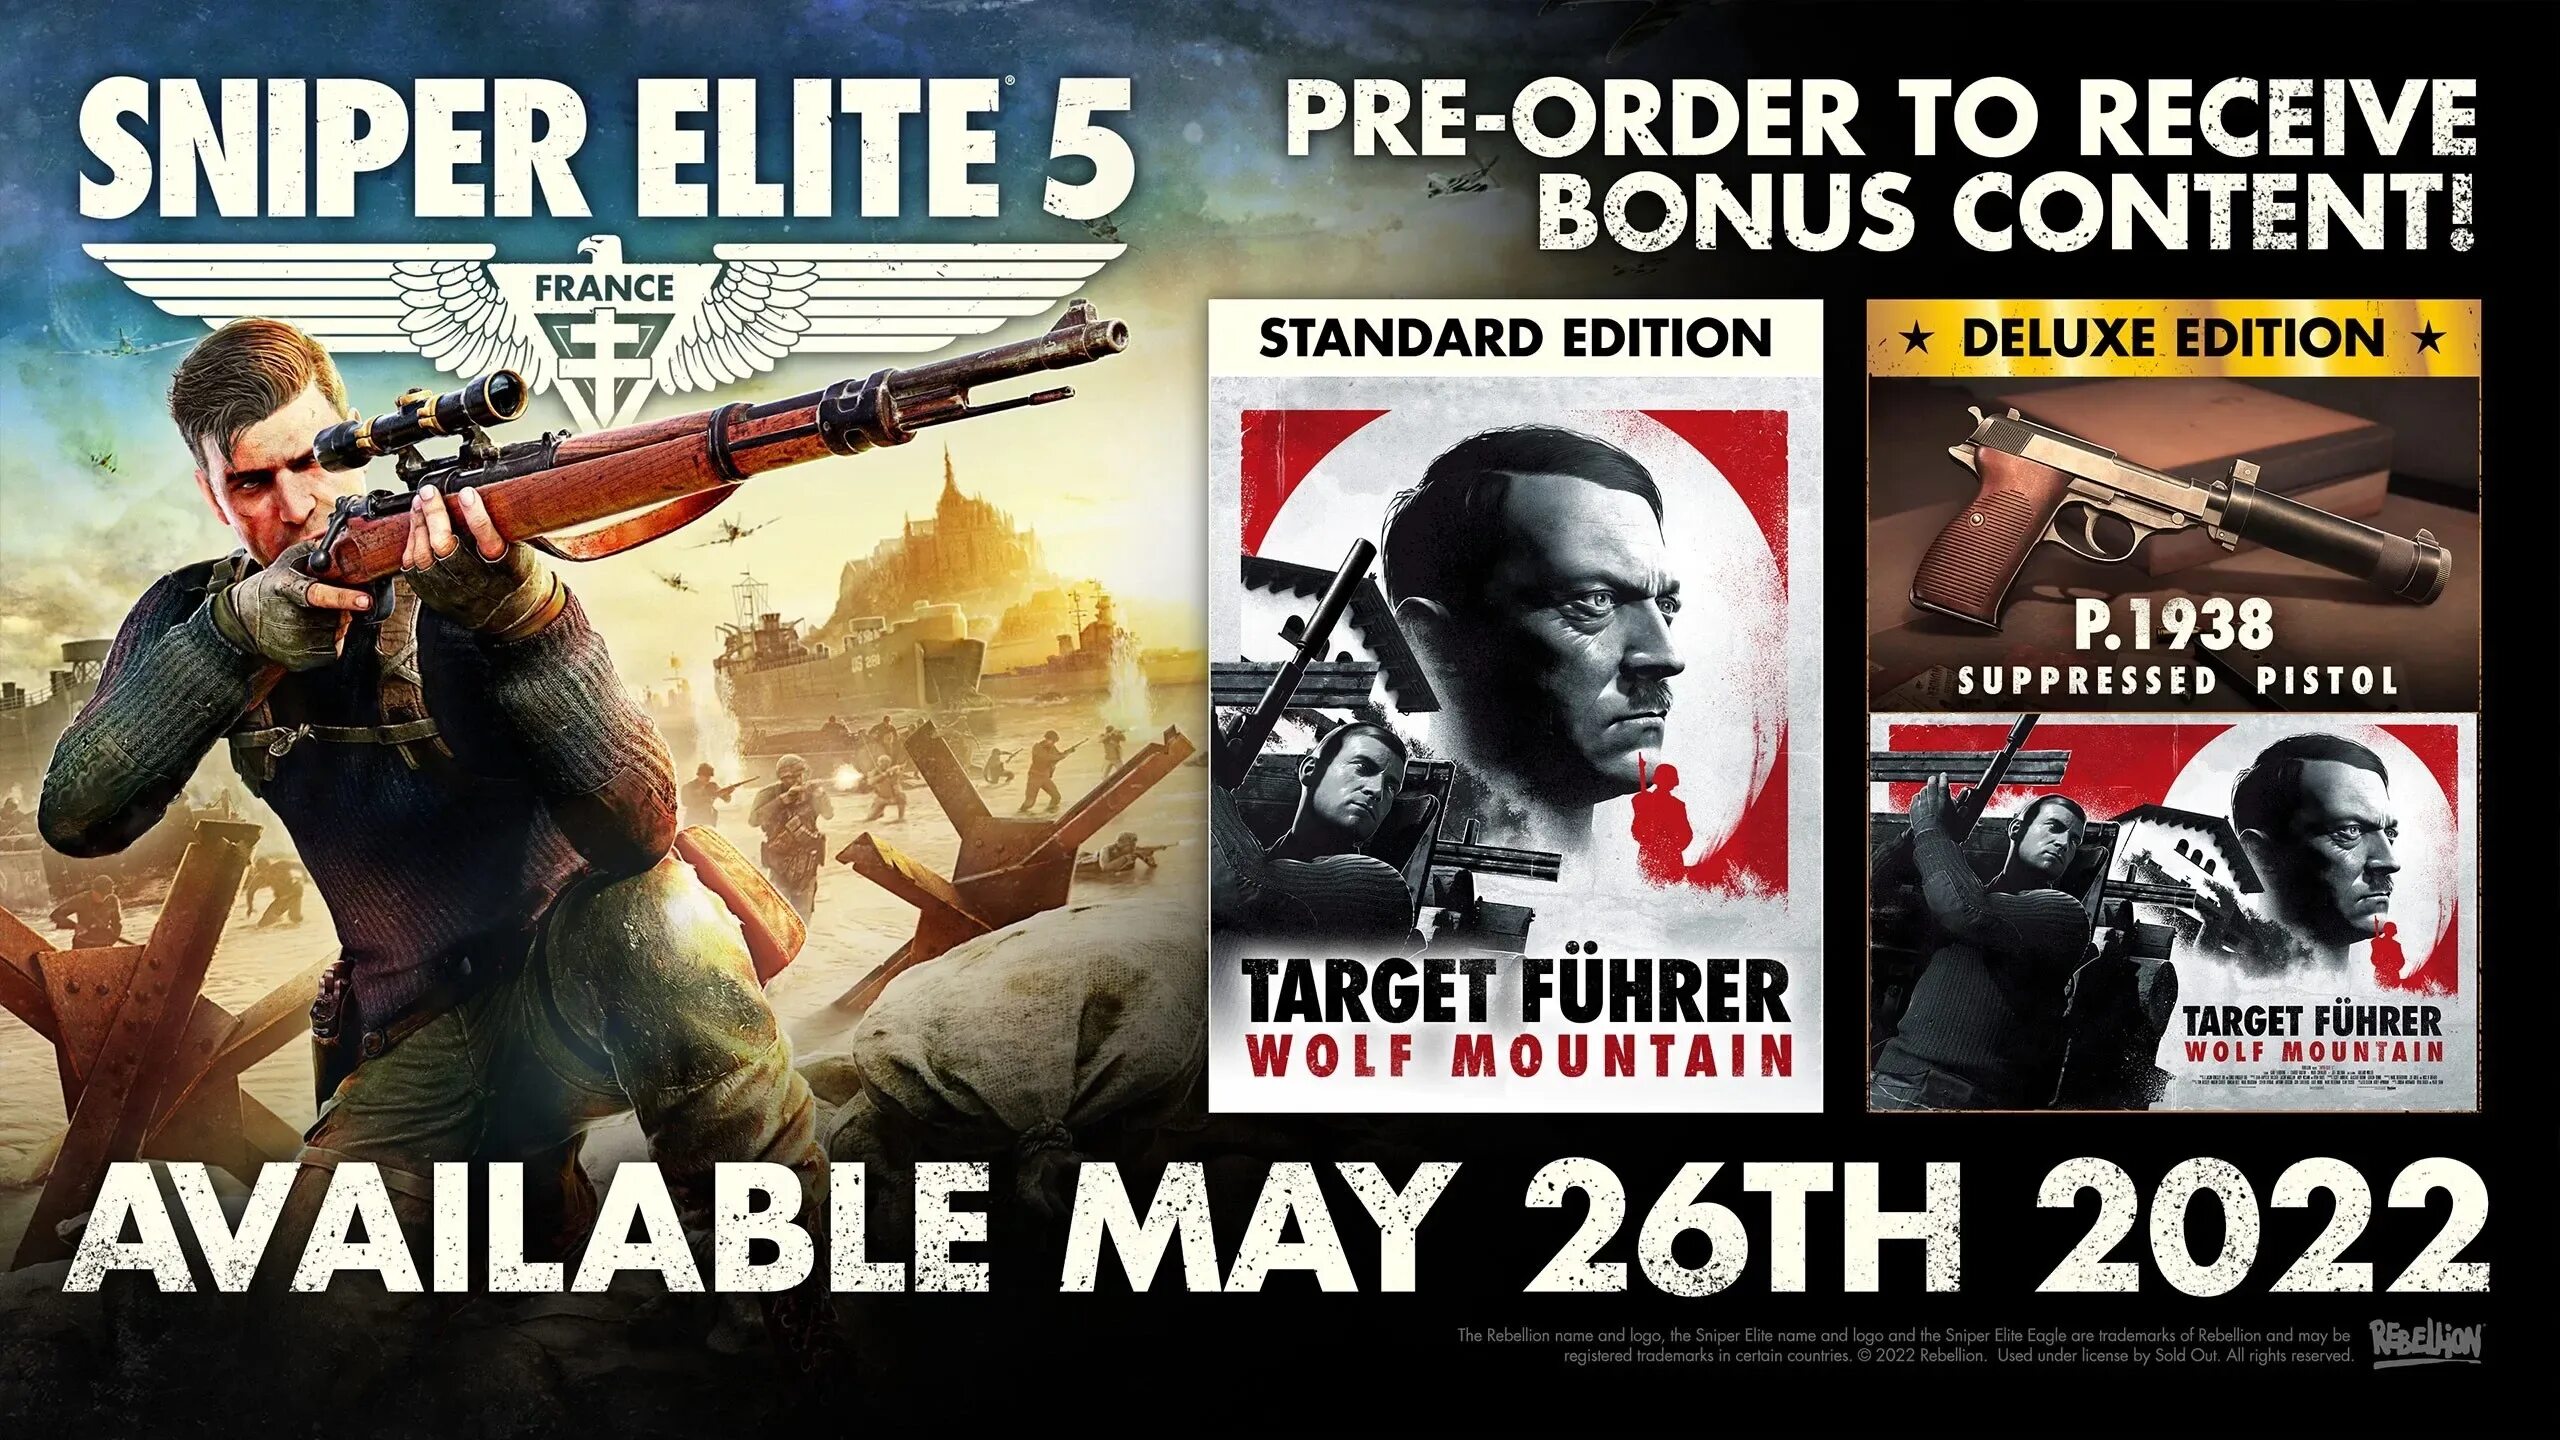 Sniper elite 5 стим. Sniper Elite 5 Deluxe Edition. Снайпер Элит 5 Дата выхода 2022. Sniper Elite 5 Ammunition Box. Sniper Elite 5 Deluxe Edition Cover.